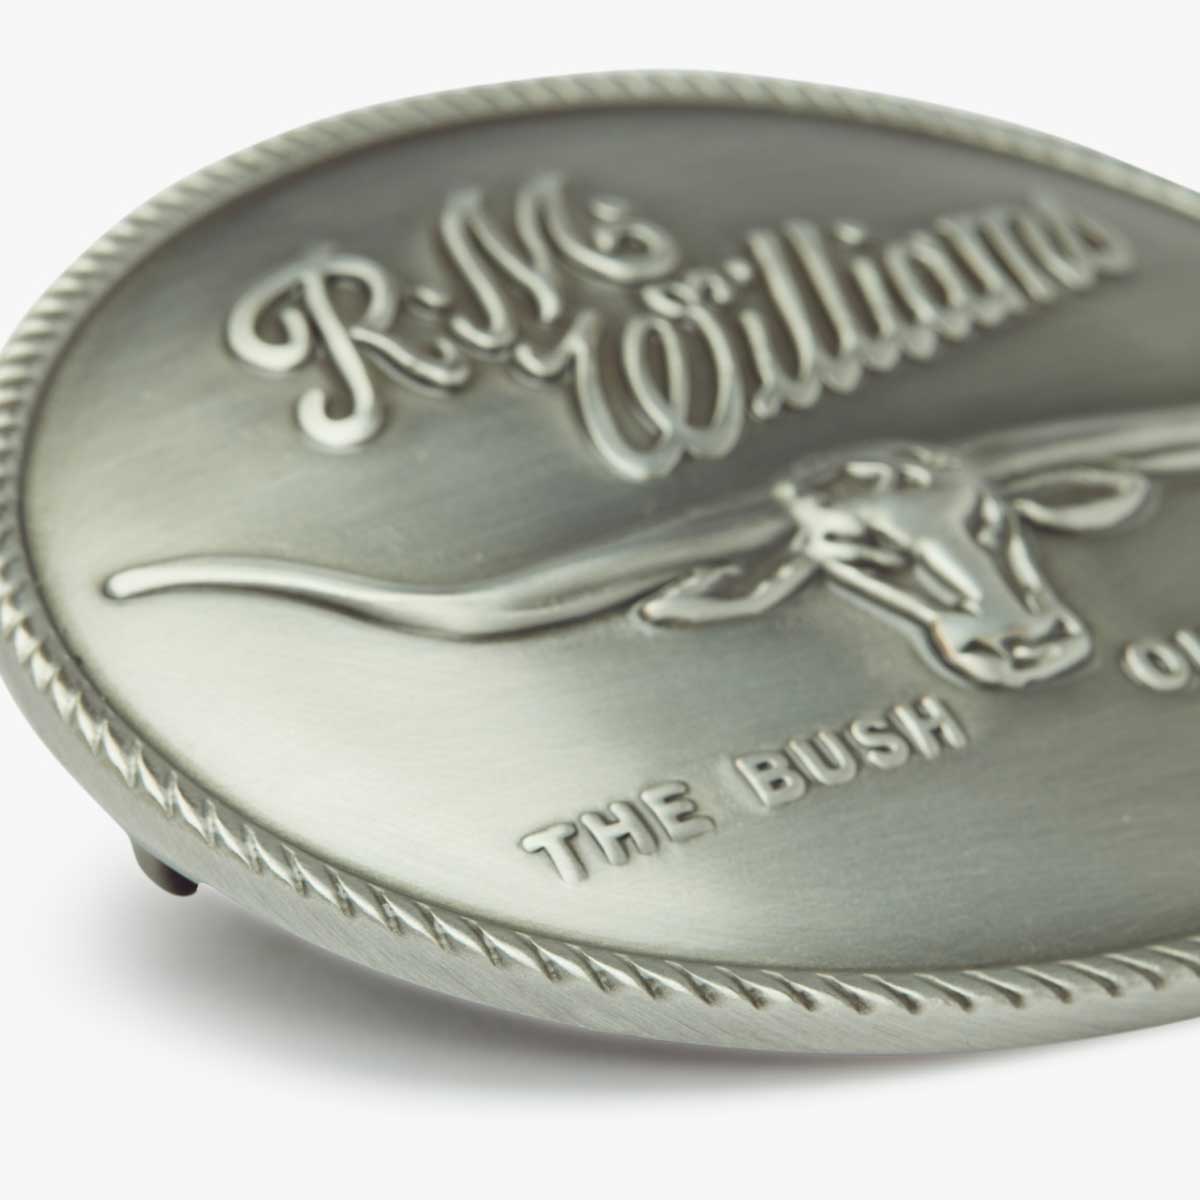 RM WILLIAMS Belt Buckle - Longhorn Trophy - Silver